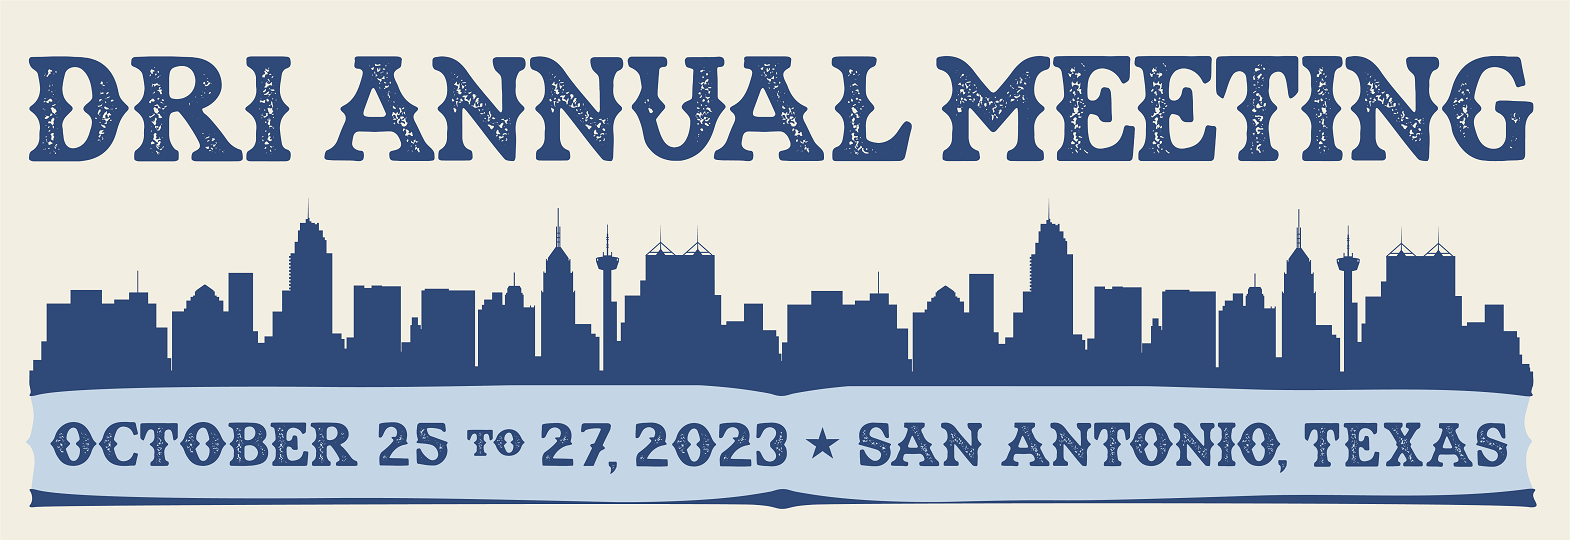 2023 Annual Meeting October 25-27 at San Antonio Texas - Register Today